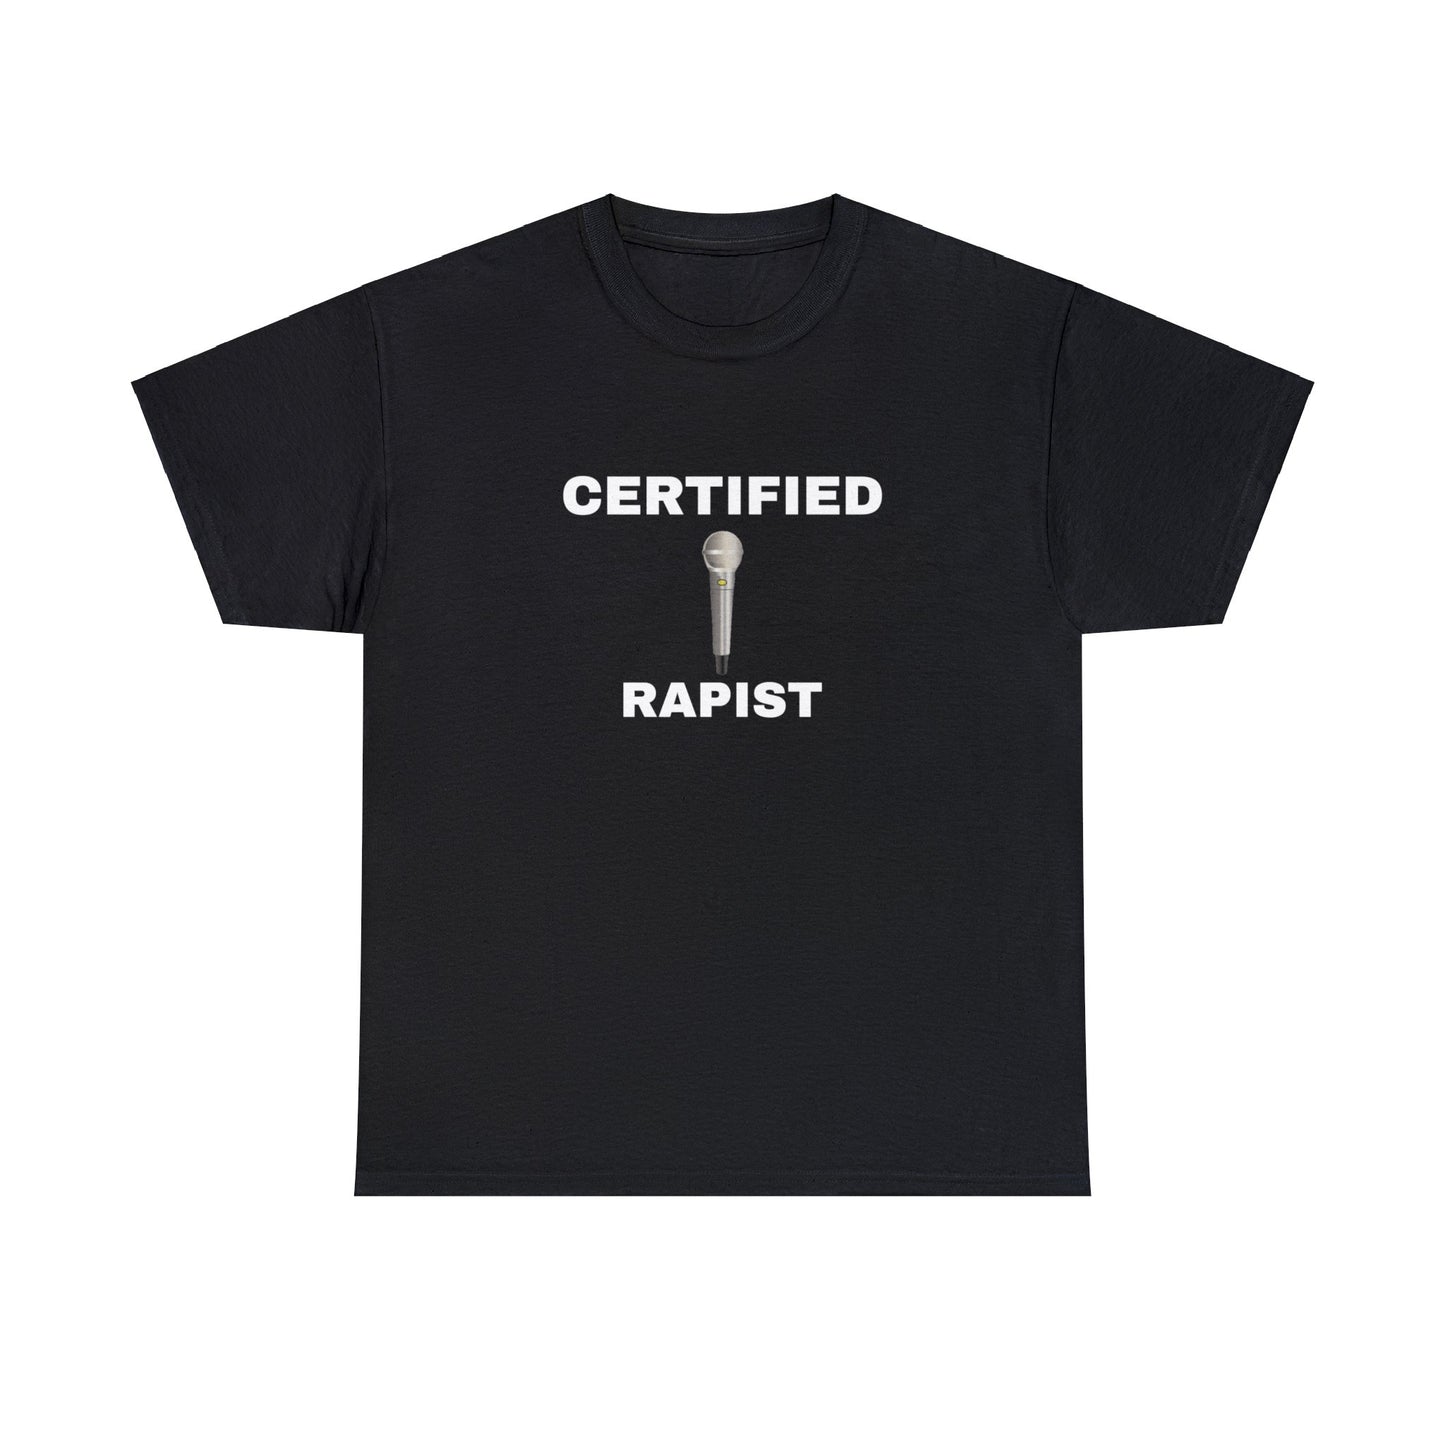 "Certified Rapist" Tee Black